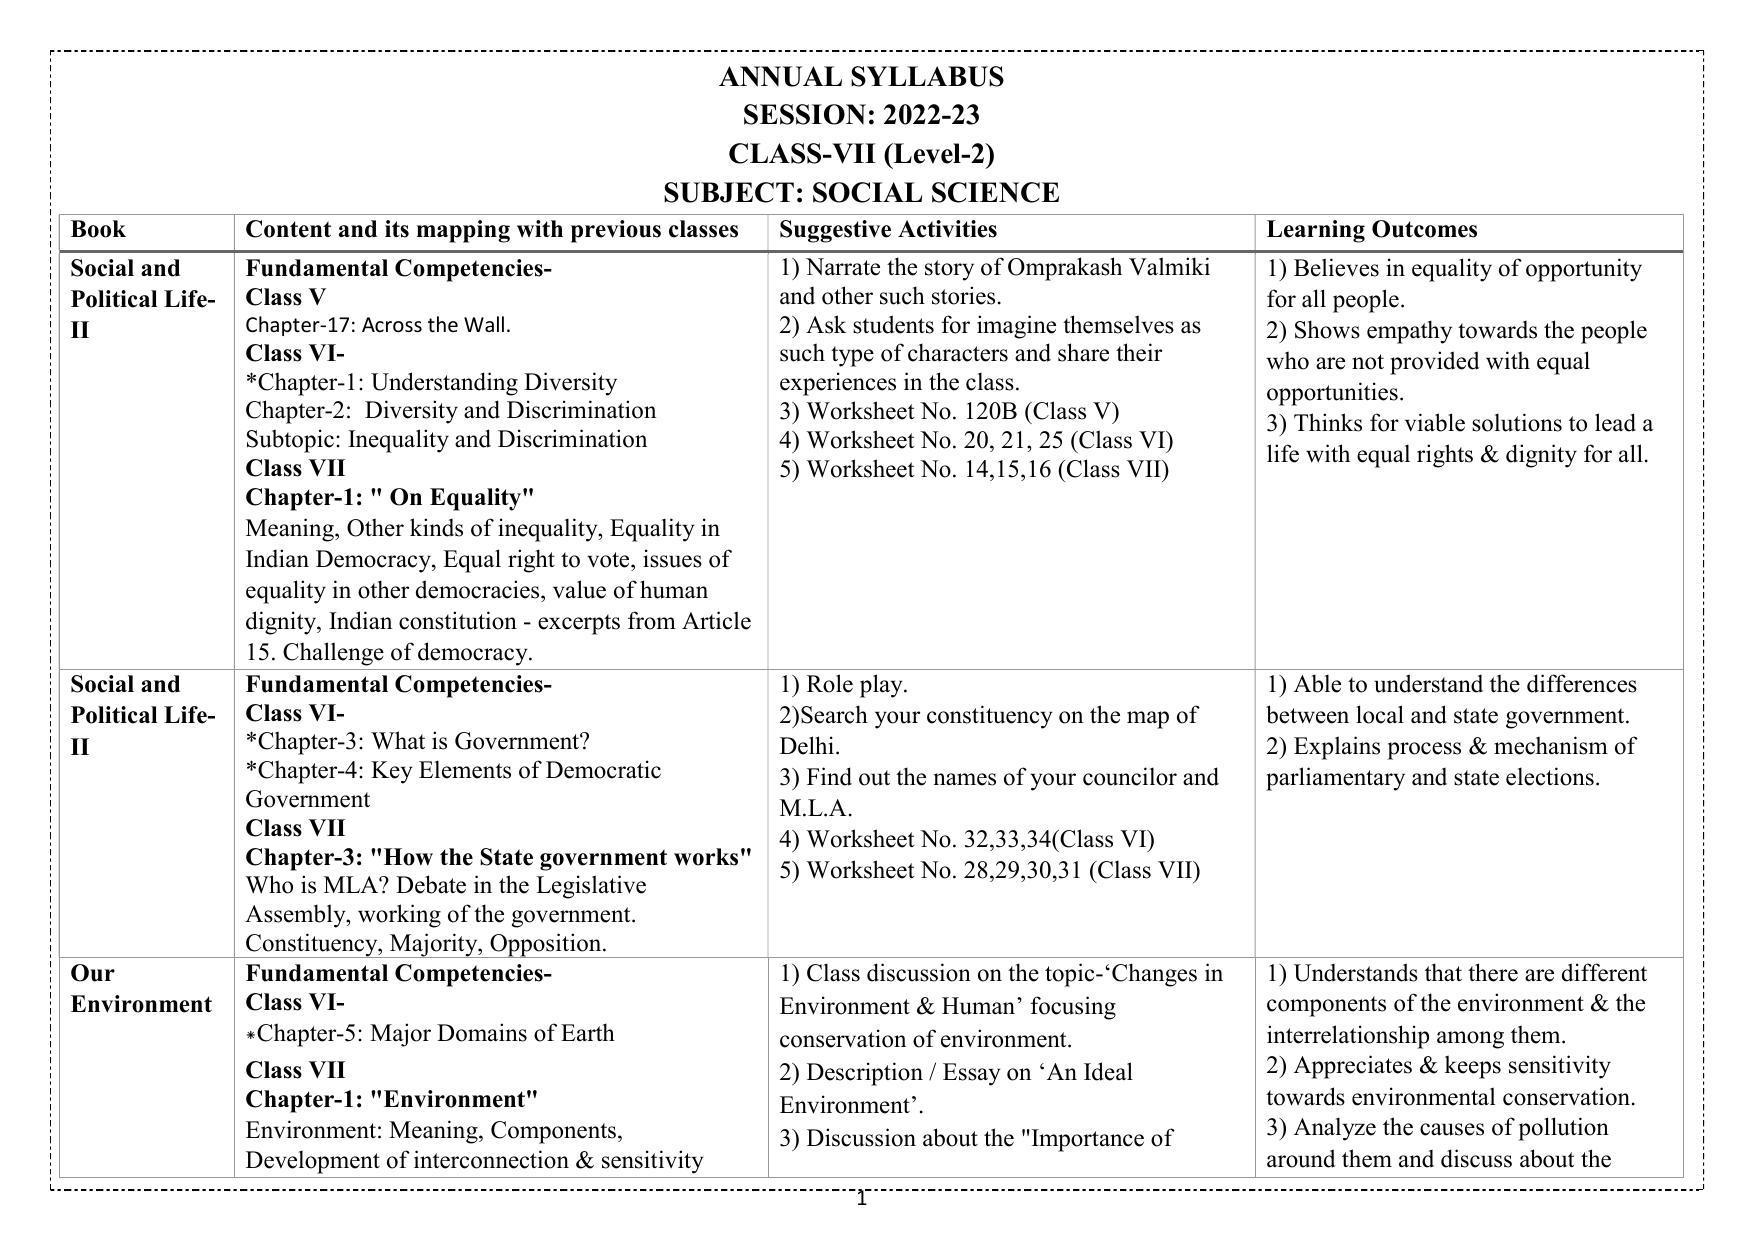 Edudel Class 7(L-2) Social Science (English Medium) Syllabus - Page 1